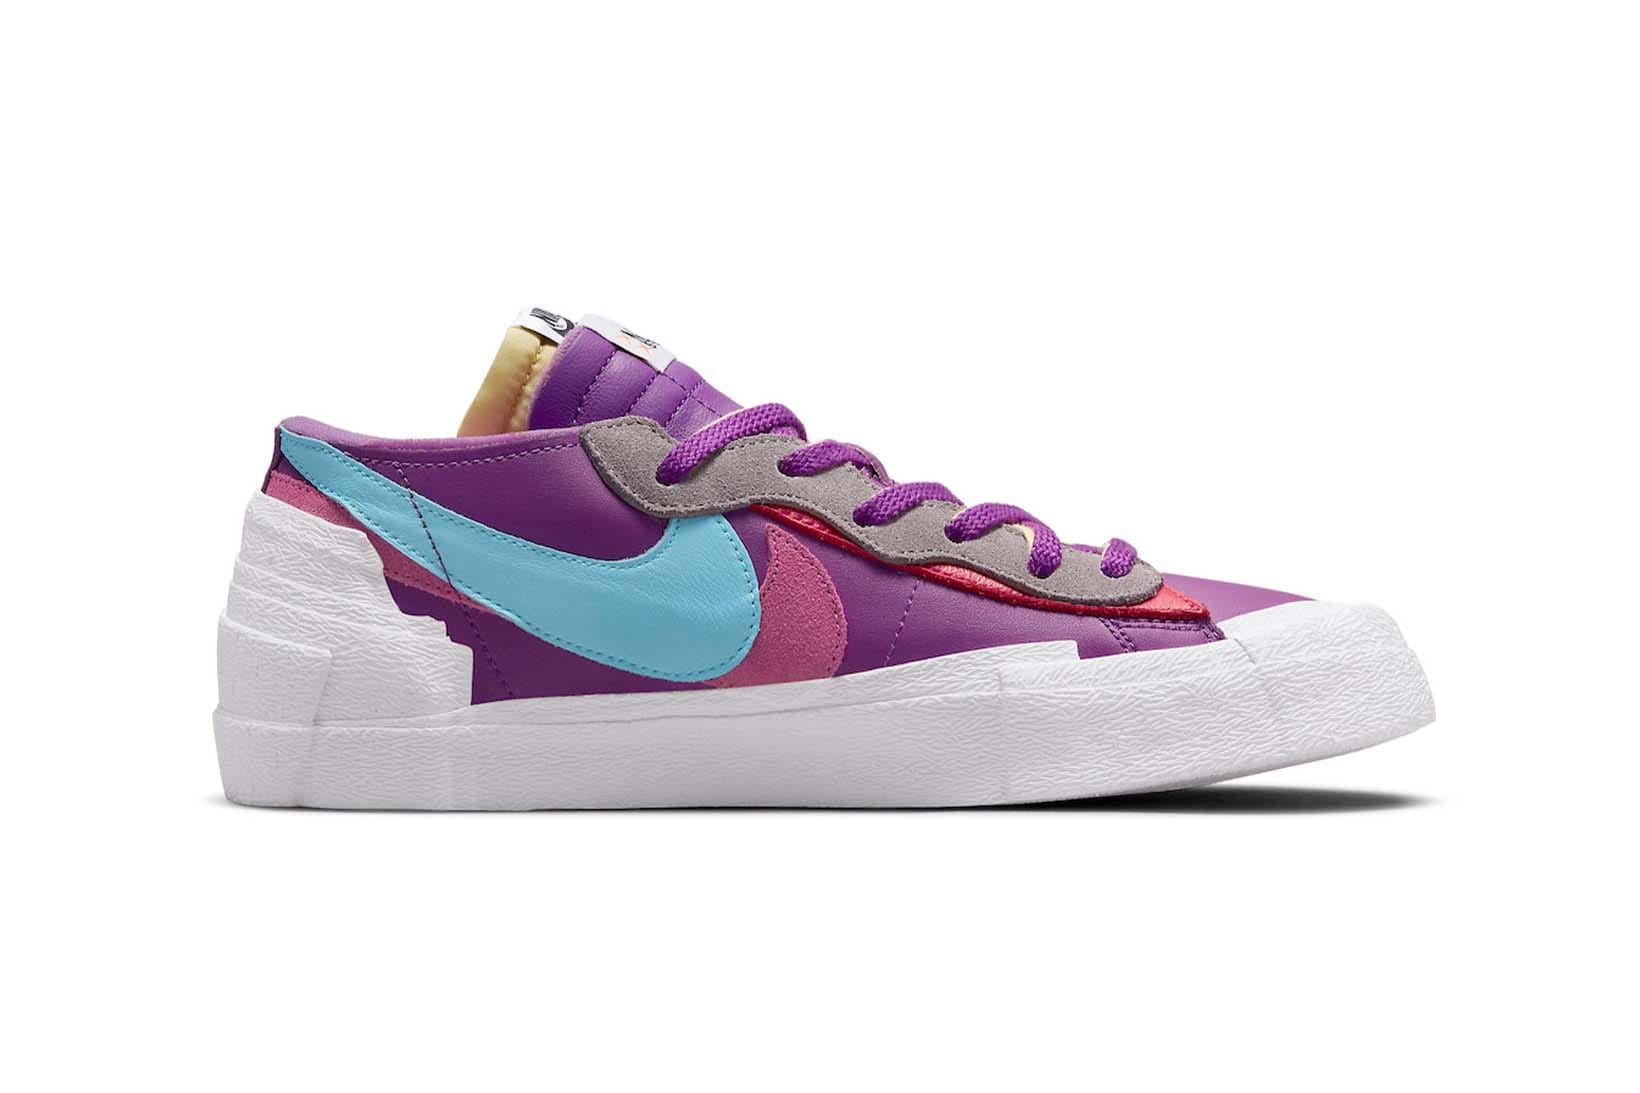 KAWS x sacai Nike Blazer Drops in Four Colorways | HYPEBAE